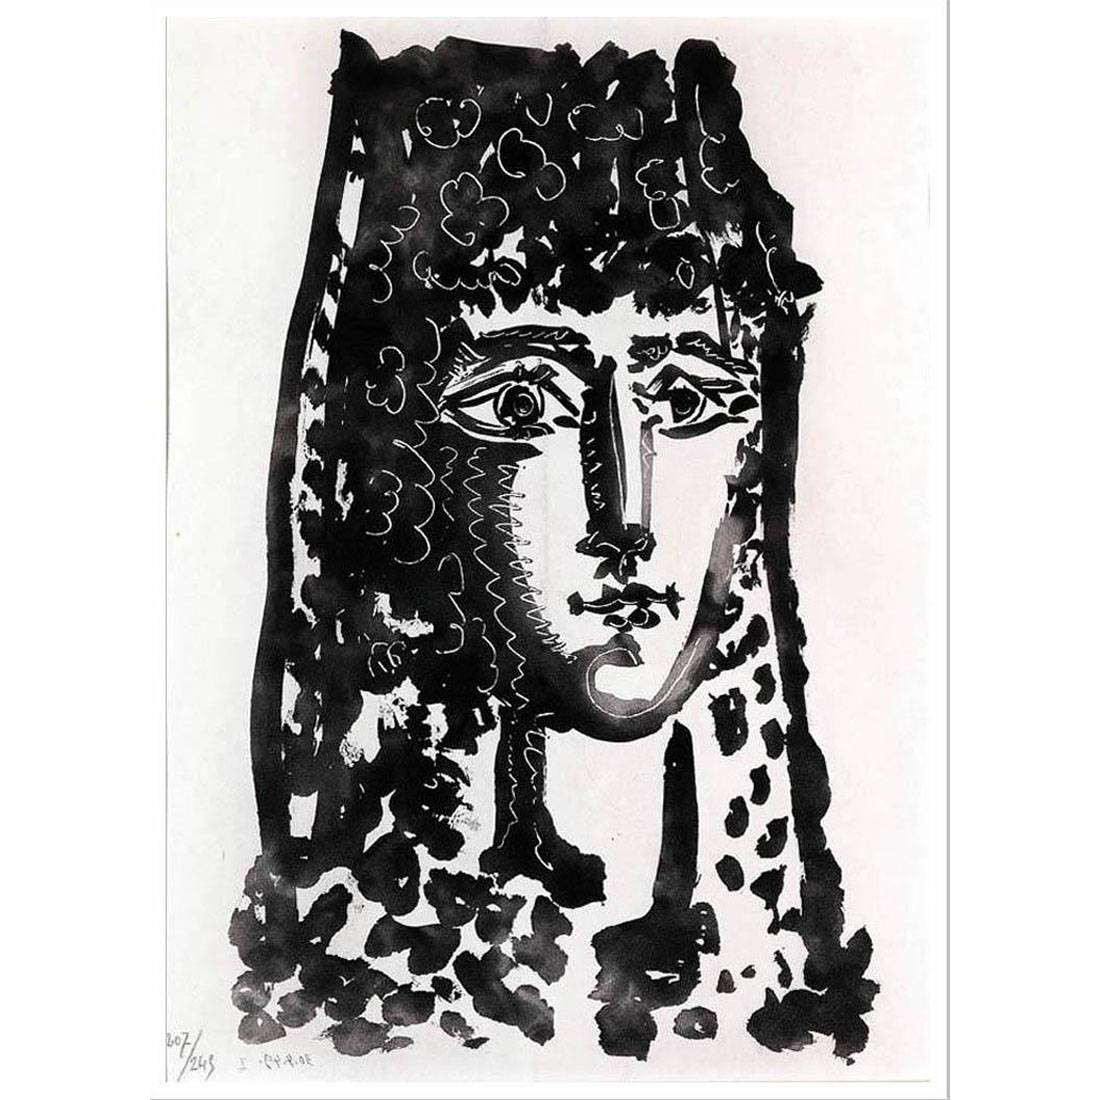 Pablo Picasso. Carmen. 1964. Altmans Gallery, Moscow